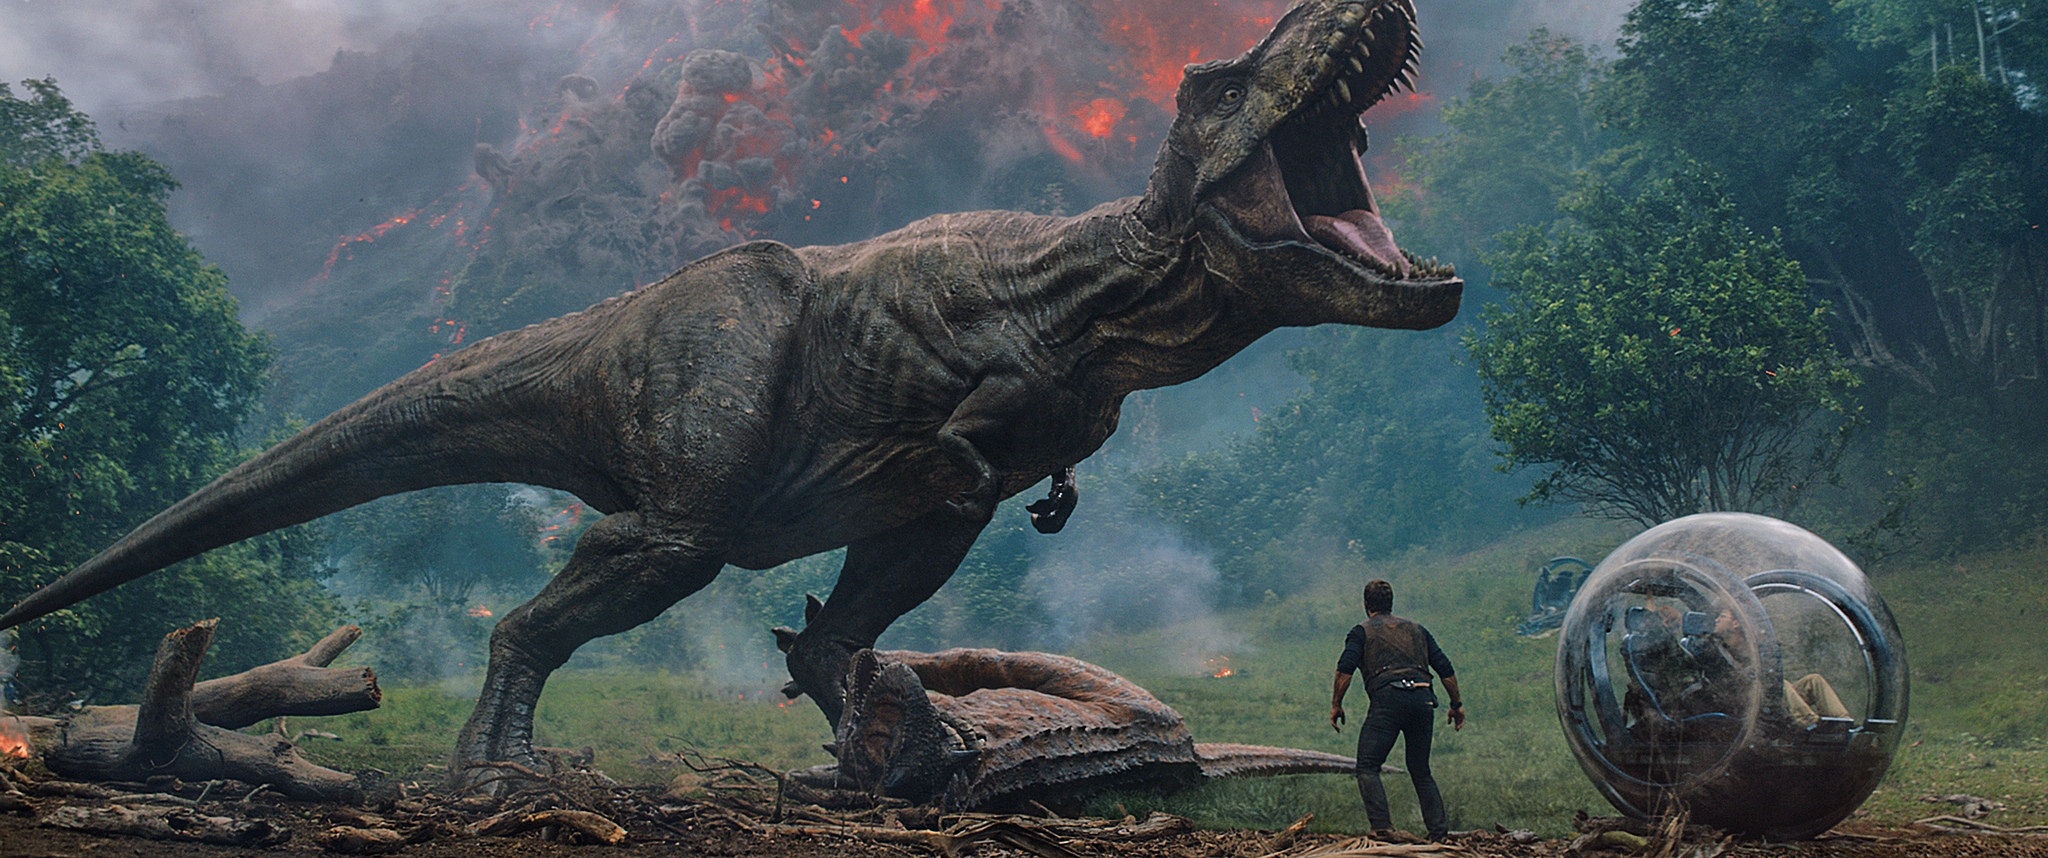 Gotik Bir Dinozor Macerası: Jurassic World Fallen Kingdom (2018) 2 – 28711186048 f14620d8bf k